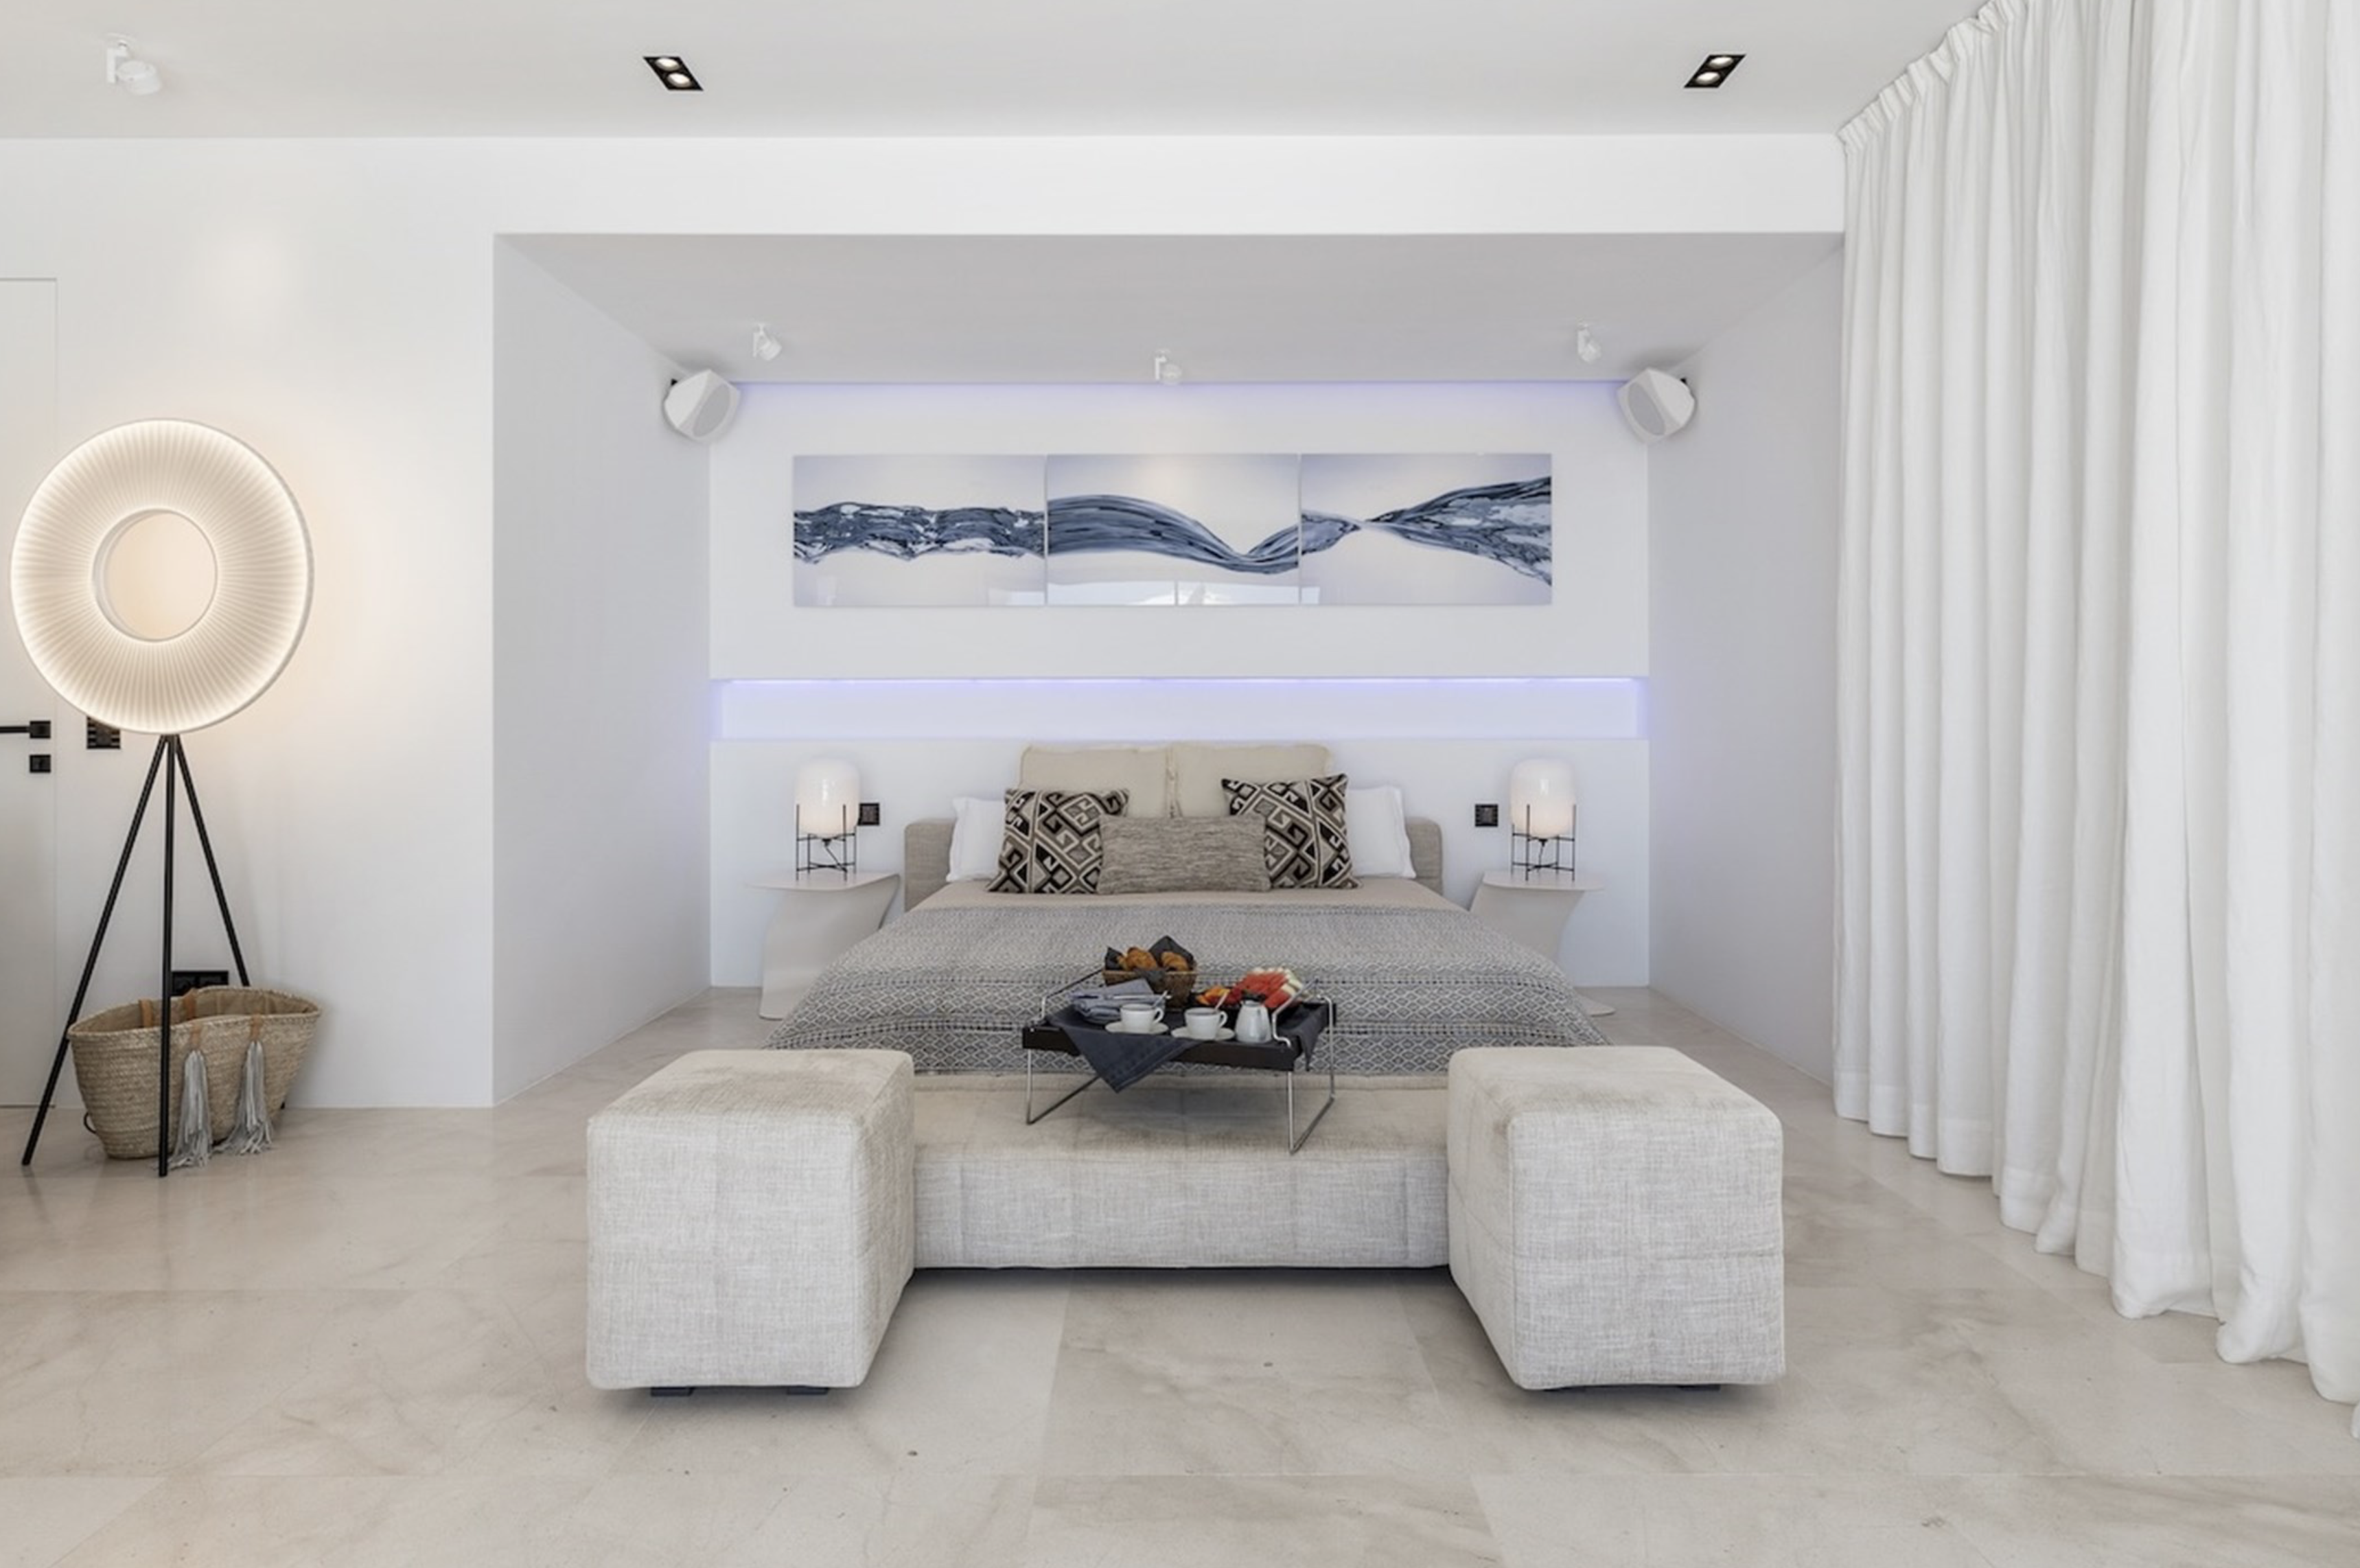 Resa Estates can nemo luxury villa Pep simo Ibiza bedroom 1.1.png